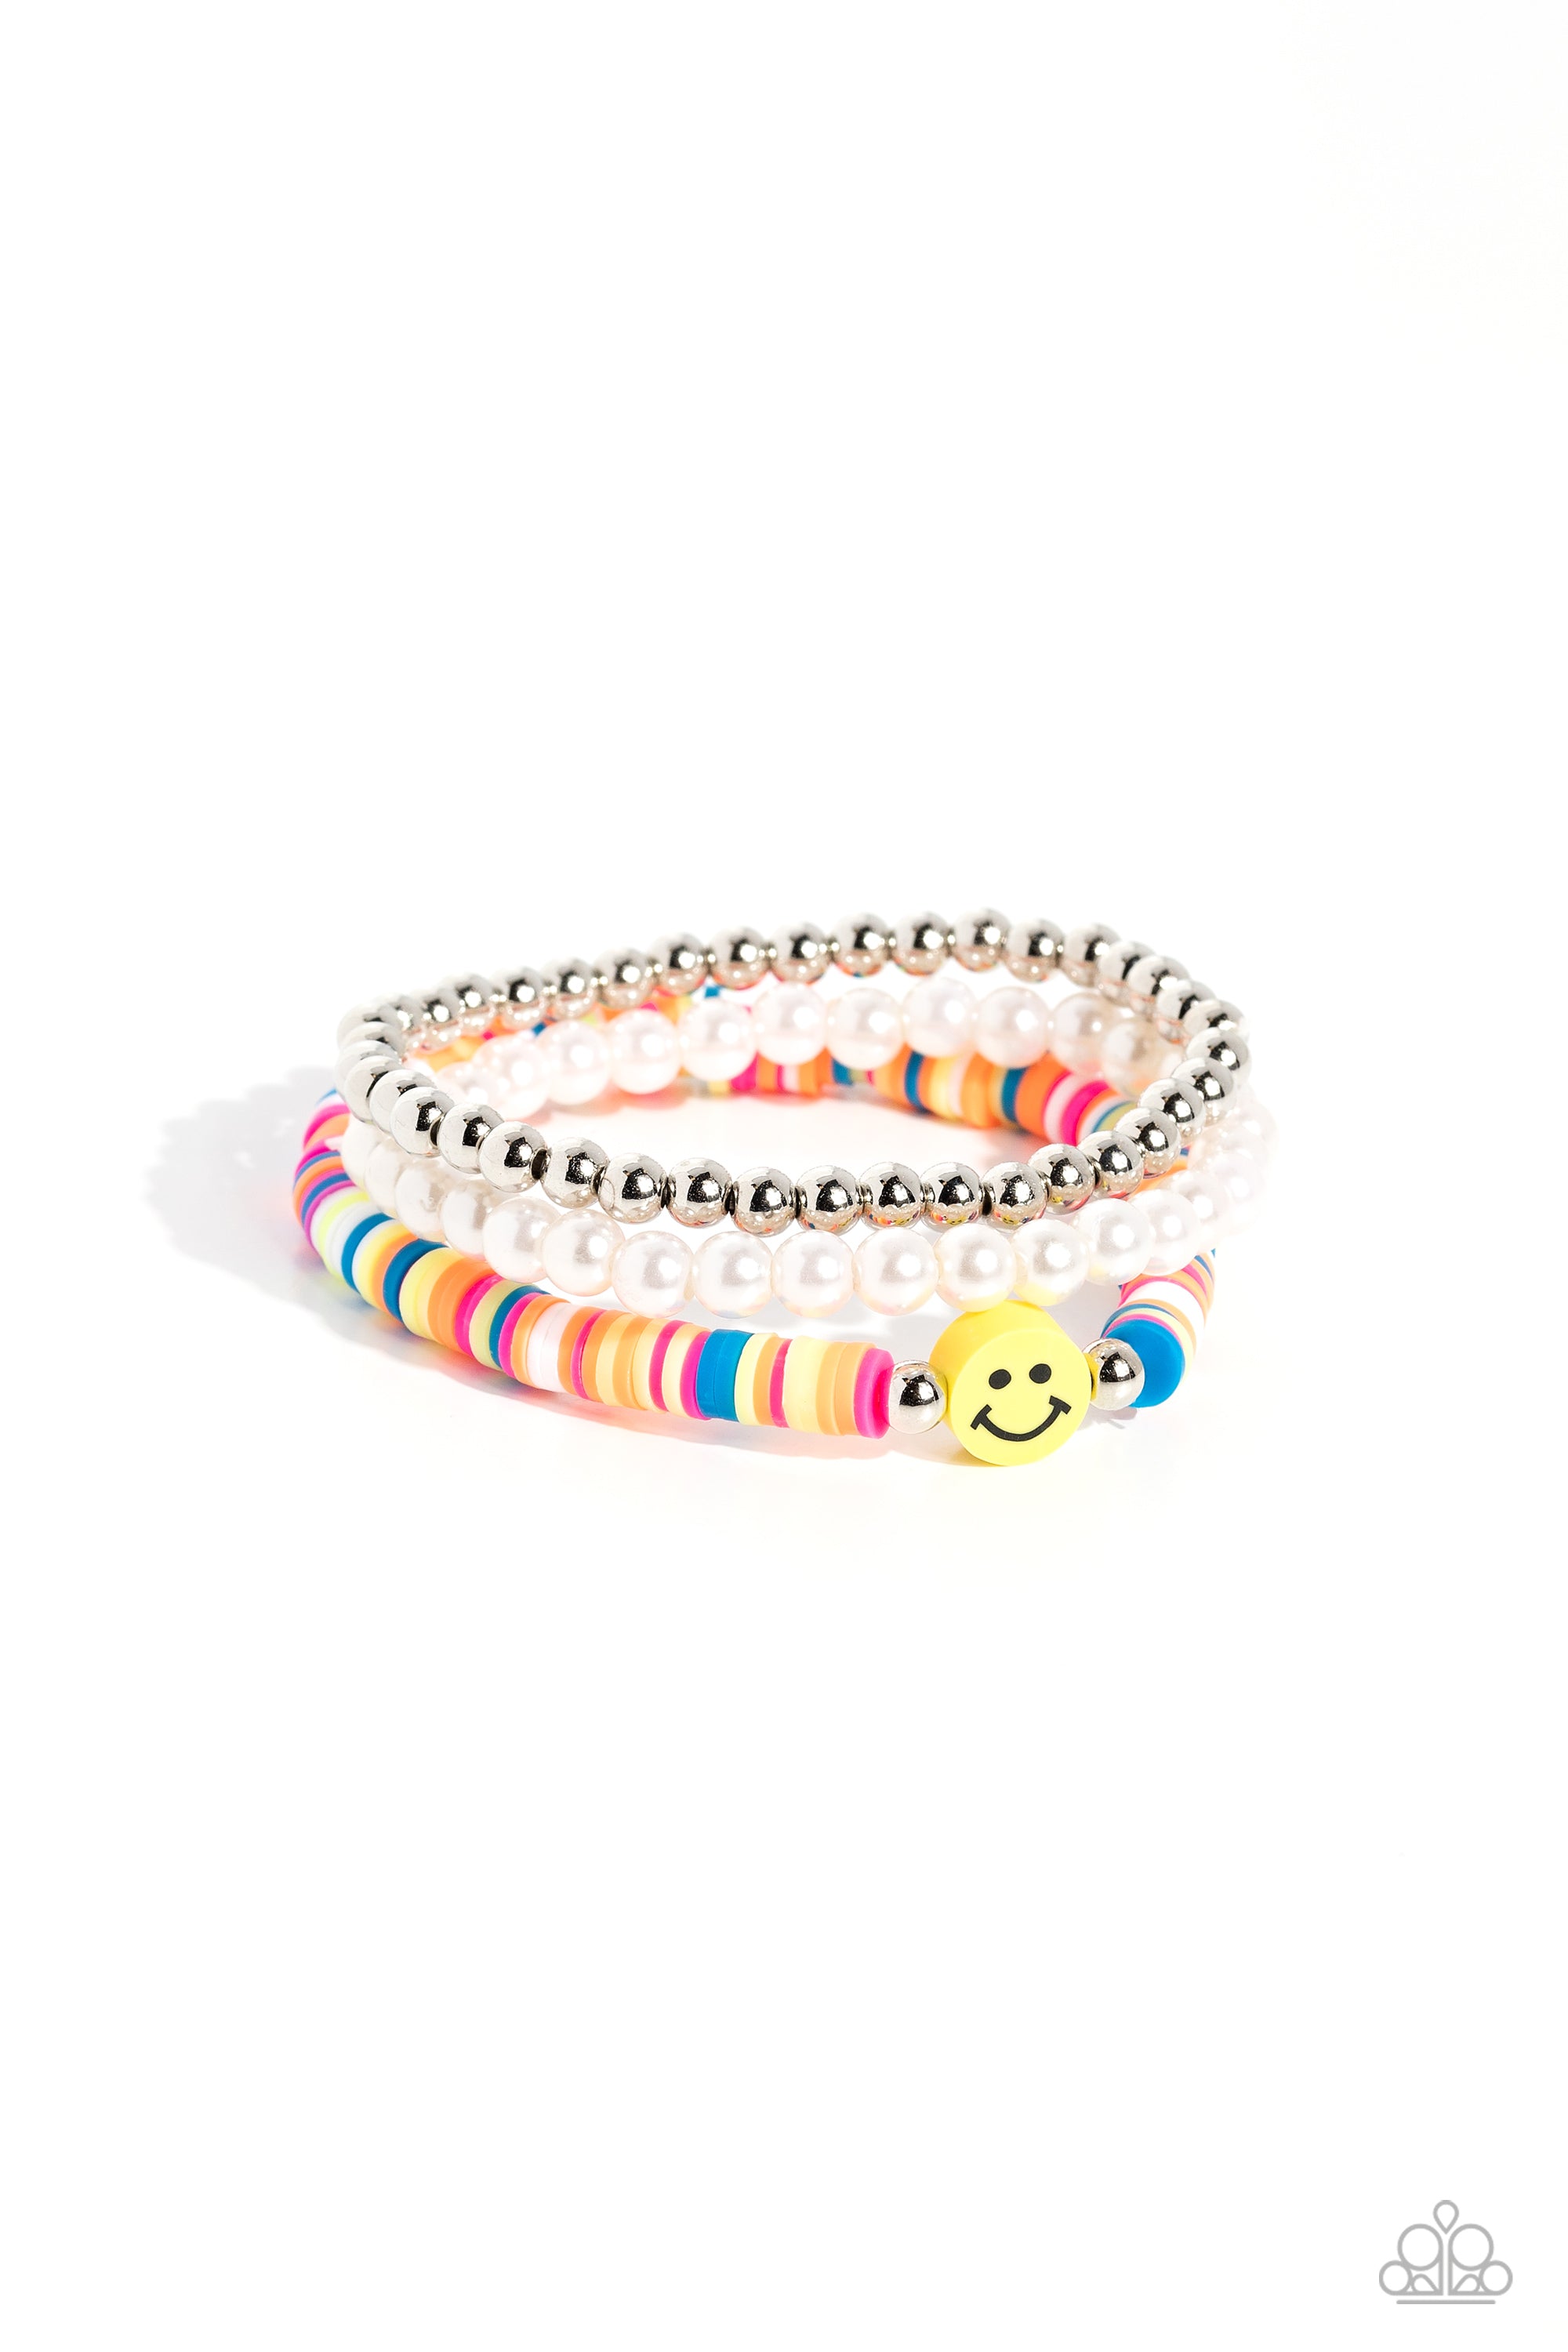 Gold Happy Face Charm Bracelet | Charm bracelet, Jewelry accessories ideas,  Preppy bracelets